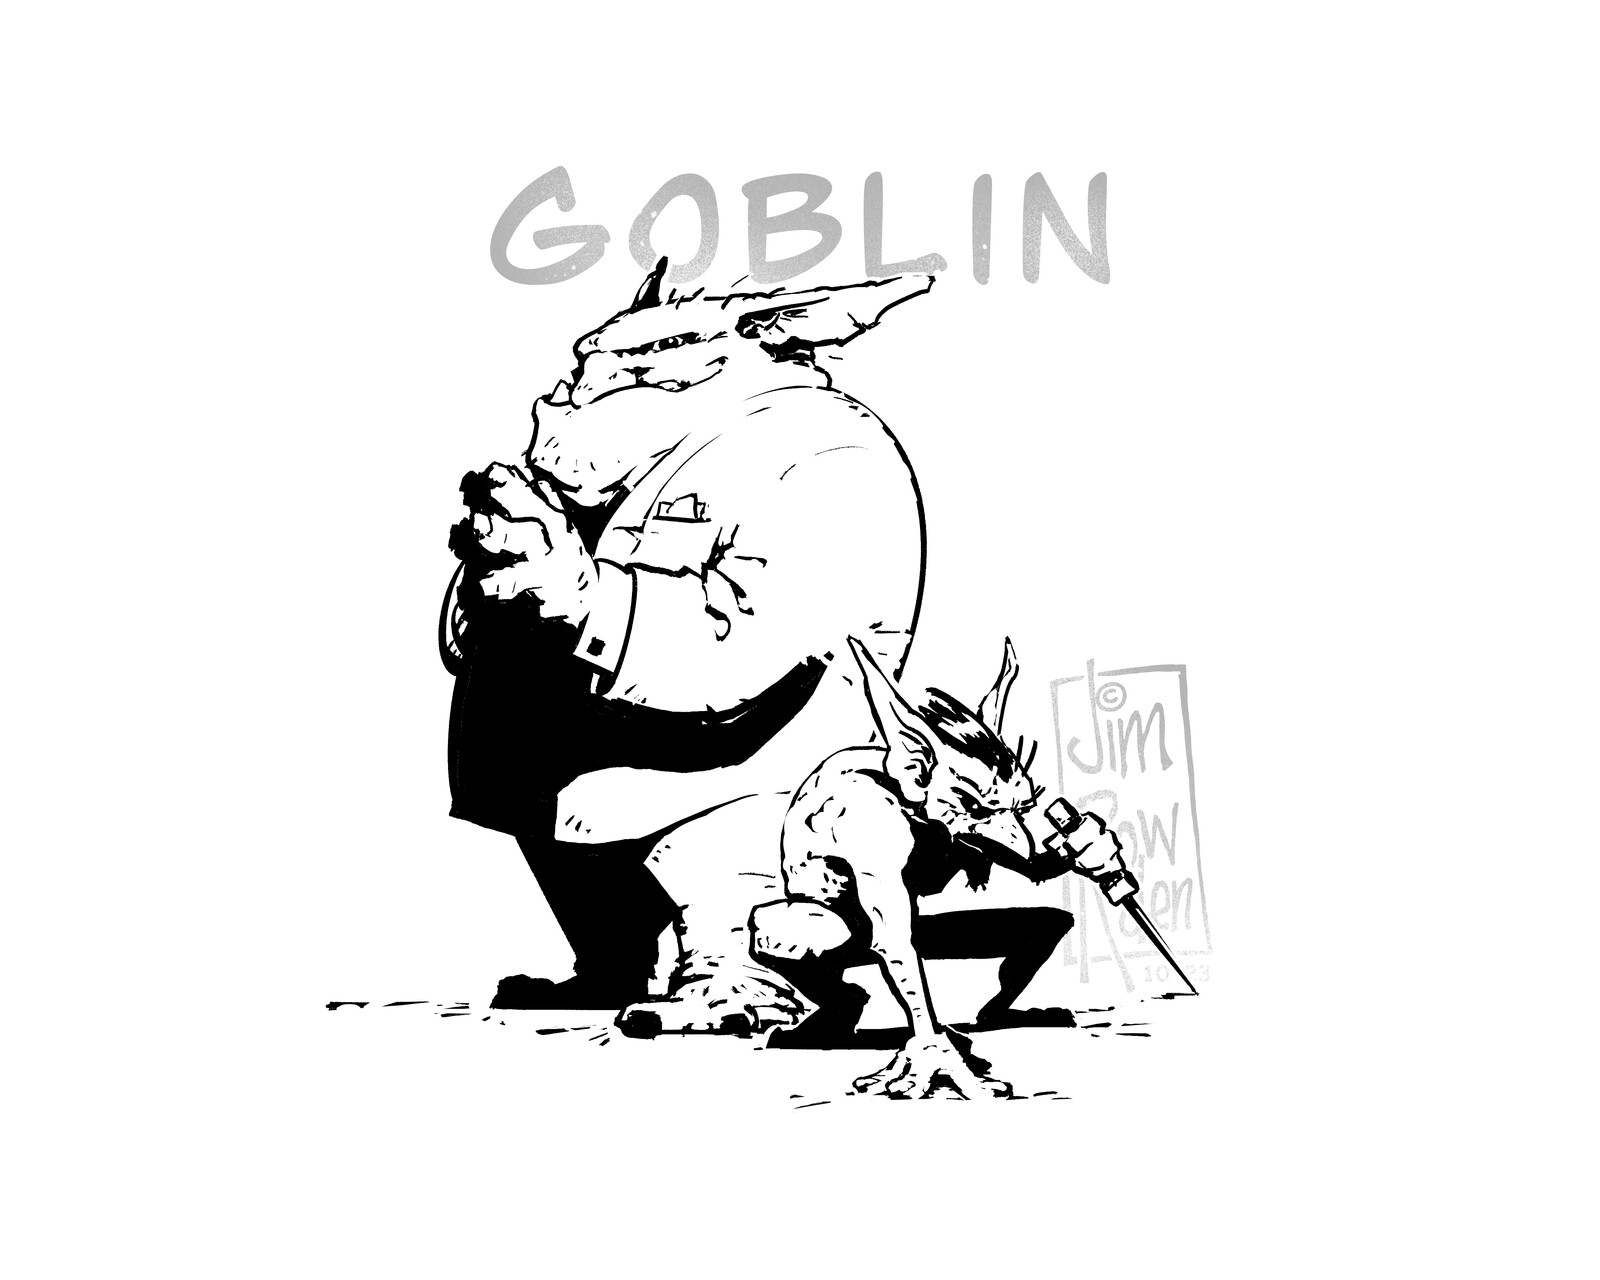 The Goblin(s)